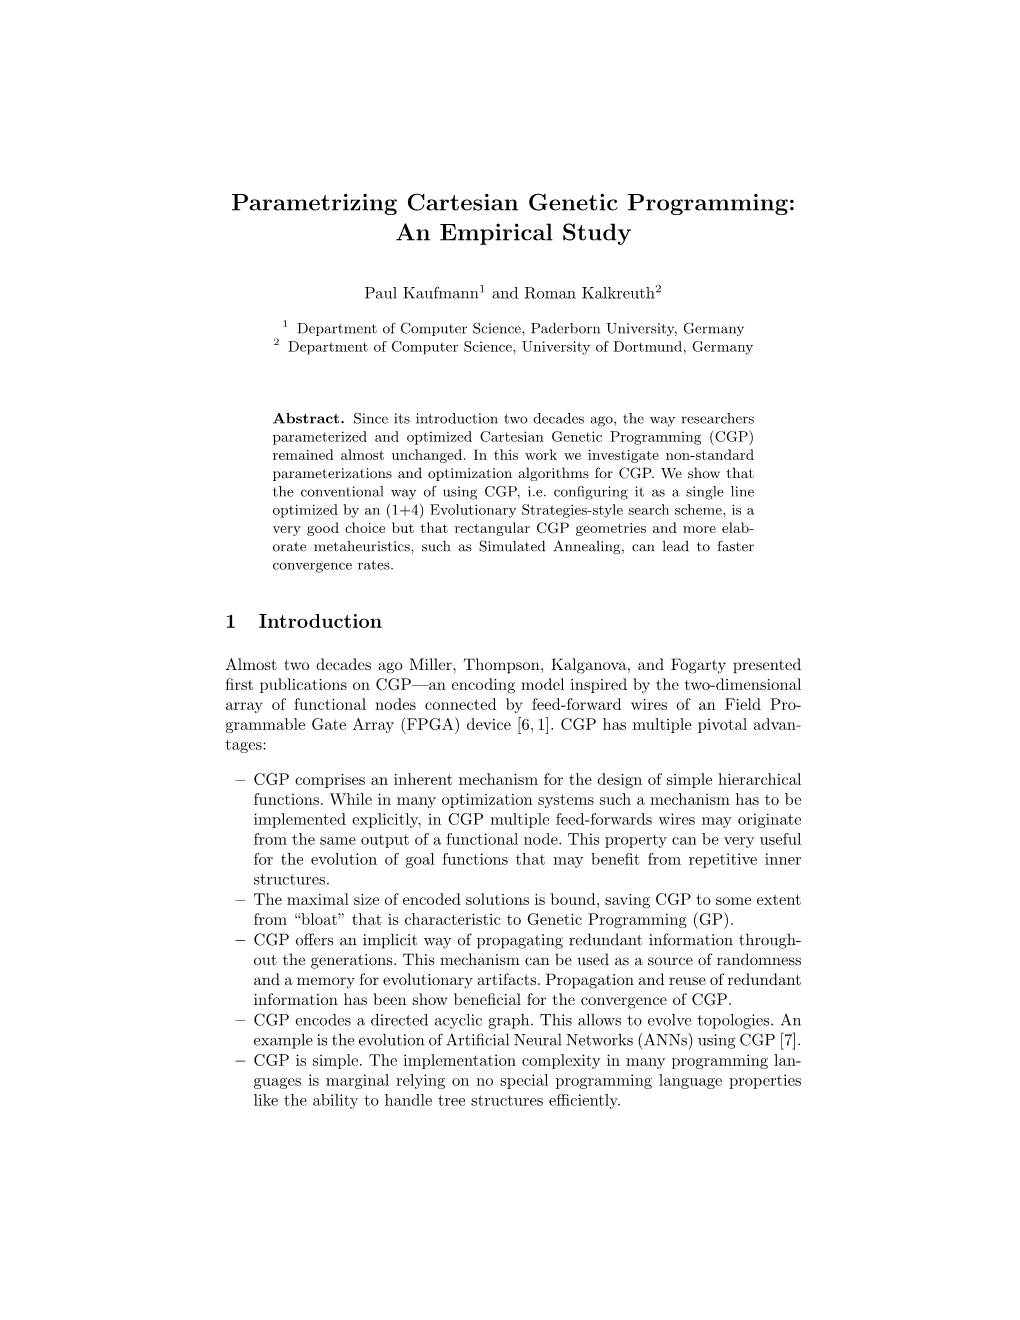 Parametrizing Cartesian Genetic Programming: an Empirical Study